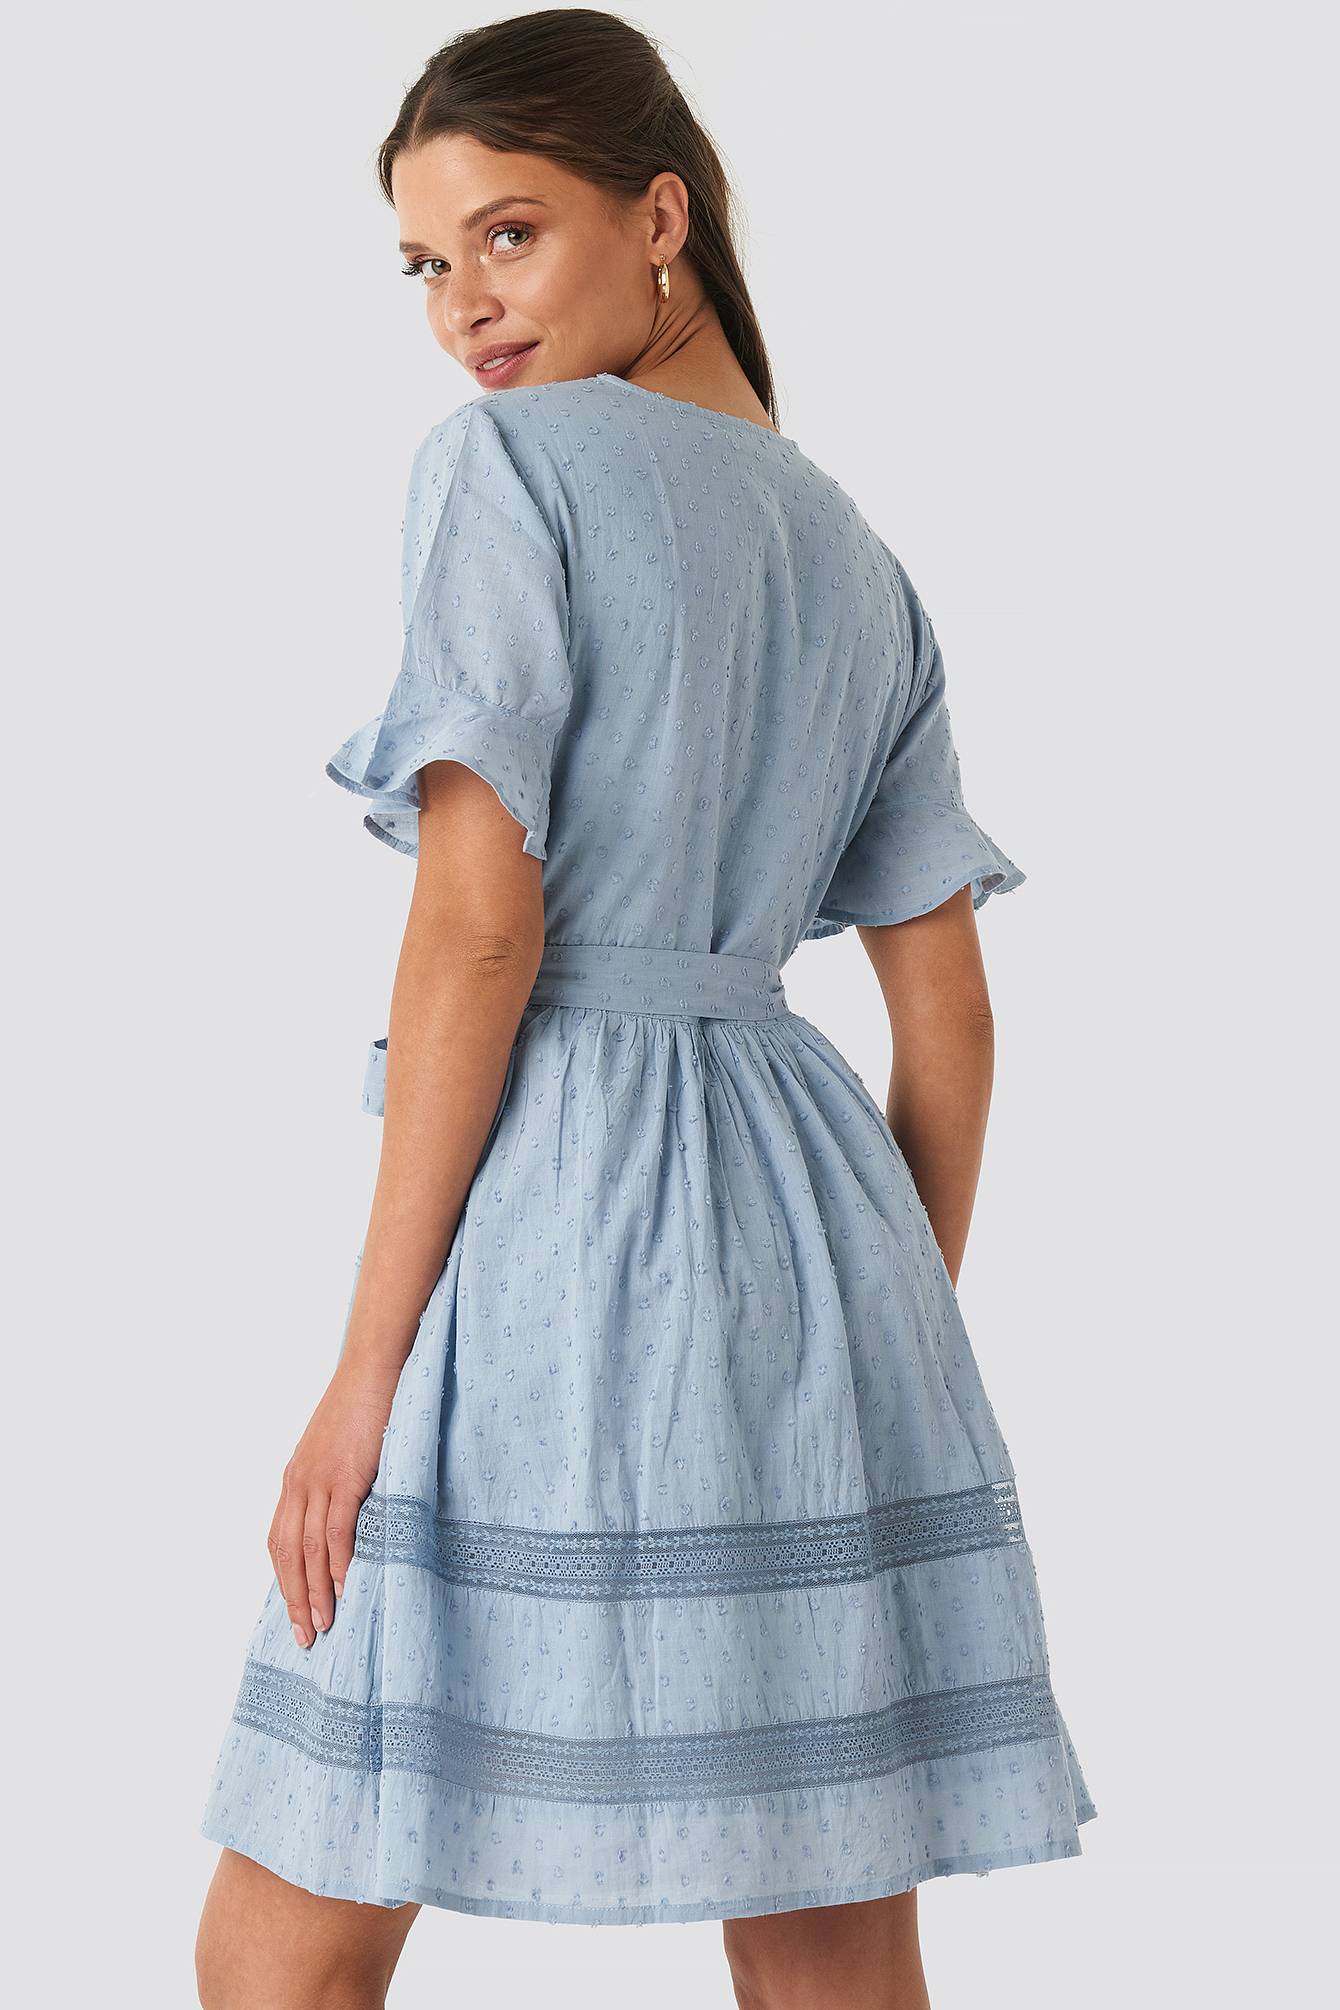 Dusty Blue Lace Insert Cotton Mini Dress